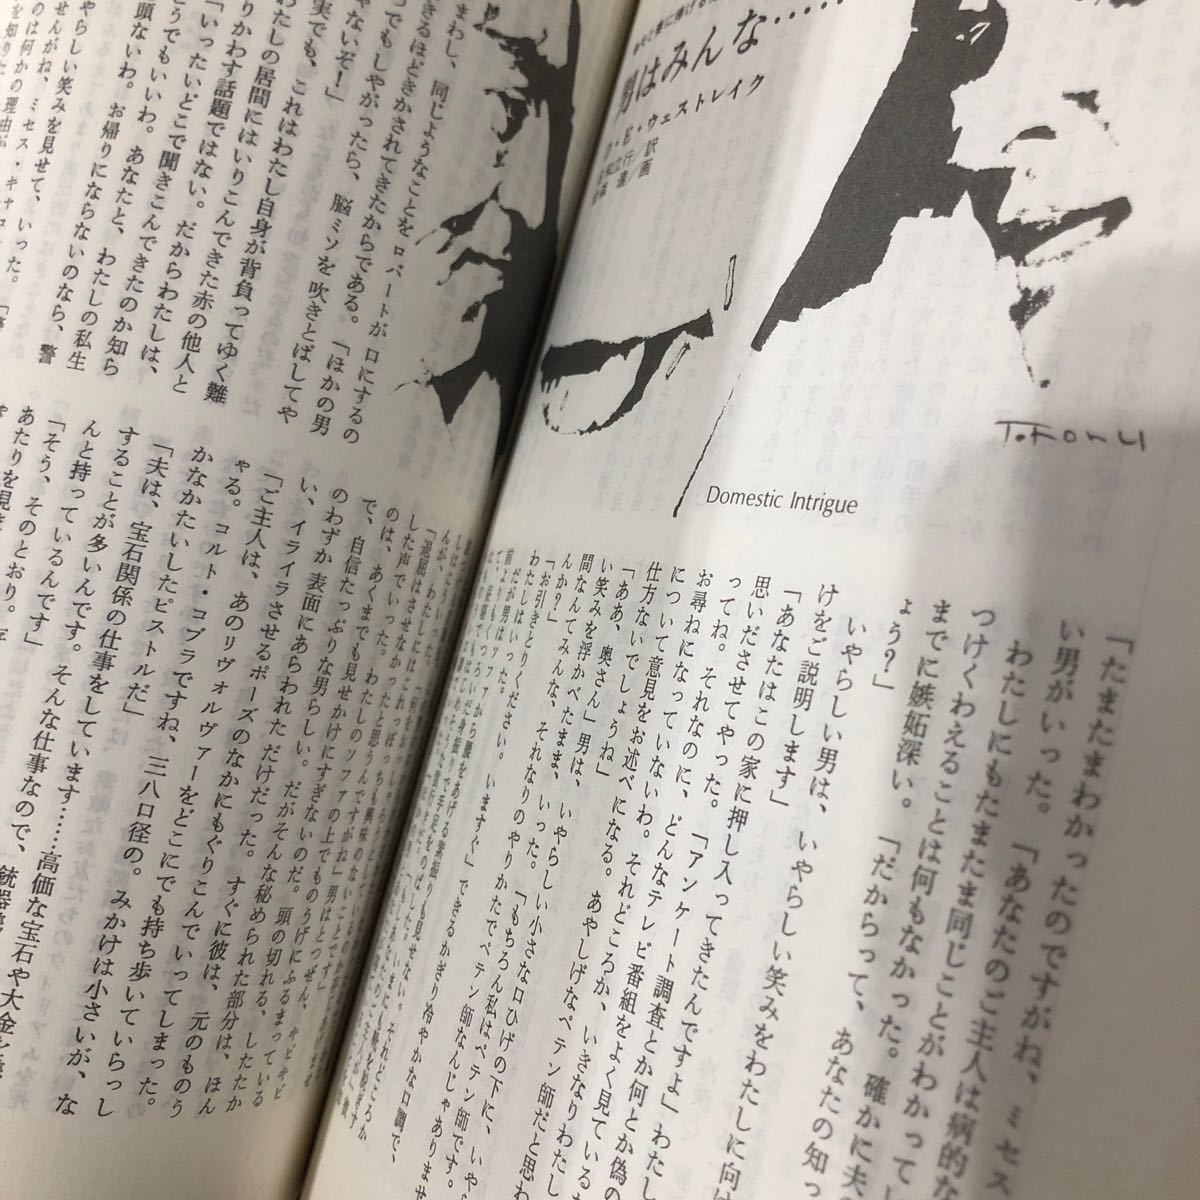 ne86 mistake teli magazine 1977 year 3 month number . river bookstore Showa era 52 year novel literary art thought history economics essay genuine article language 